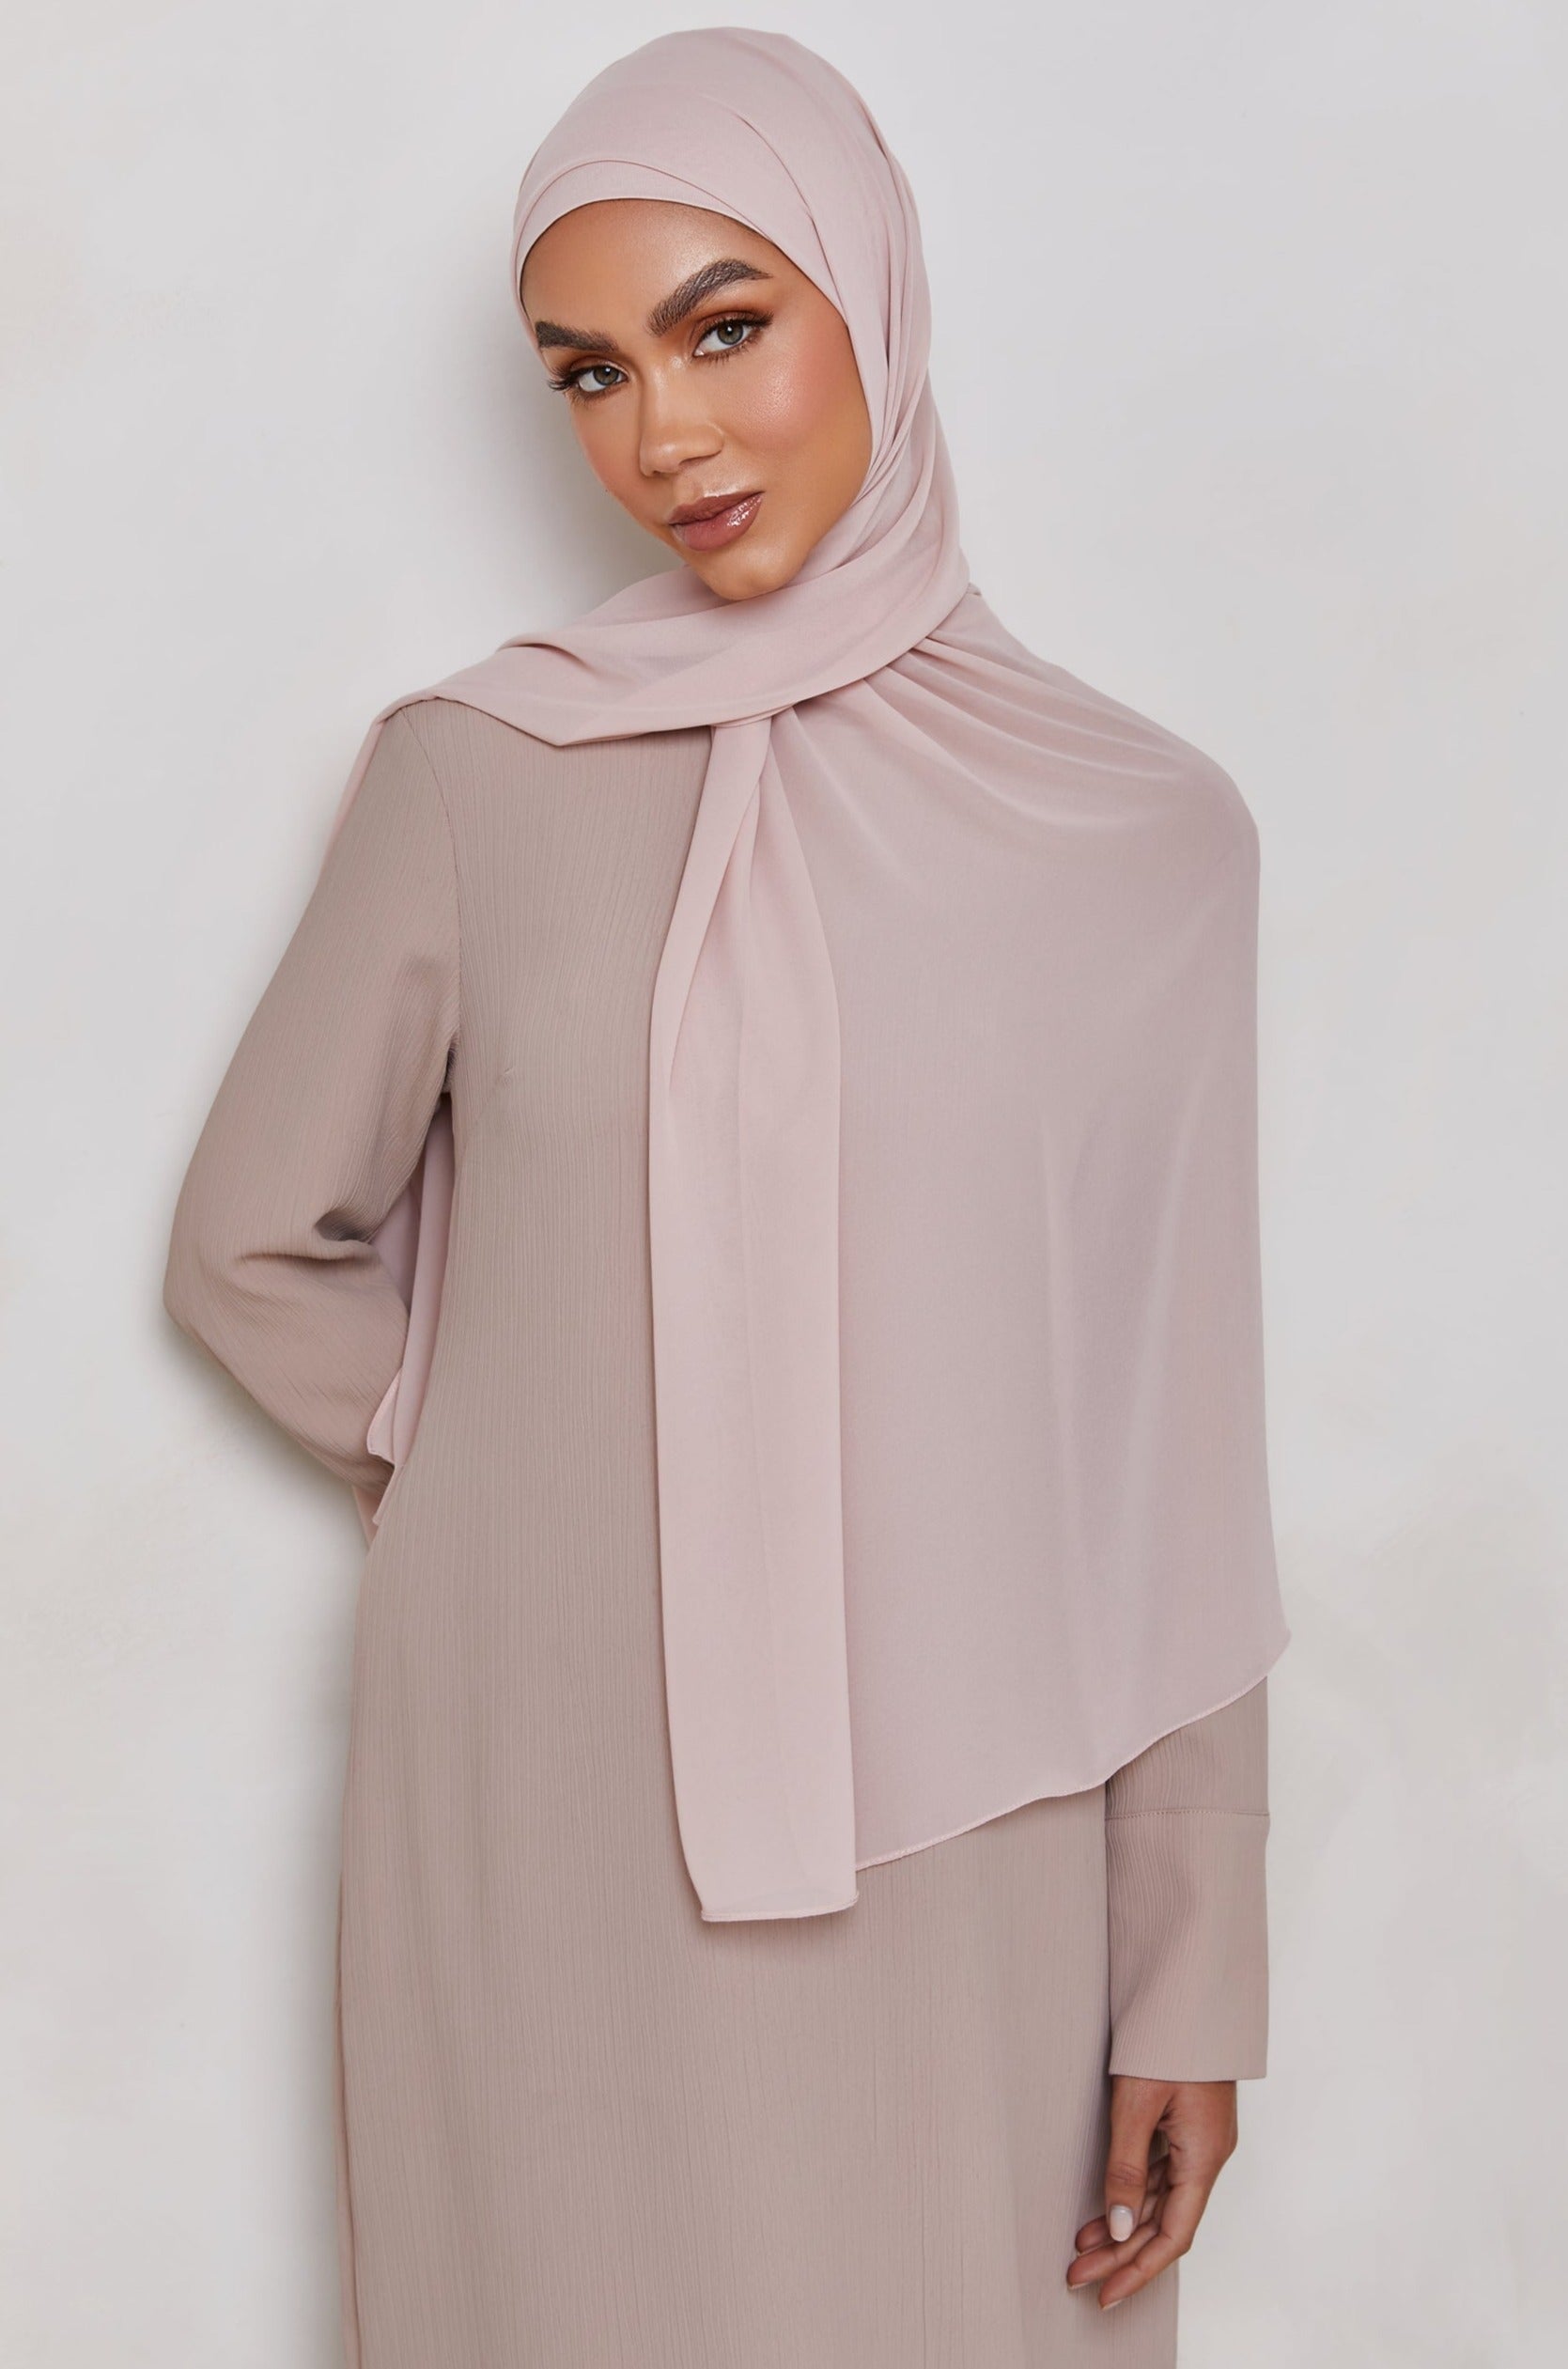 Chiffon LITE Hijab - Sepia Rose epschoolboard 